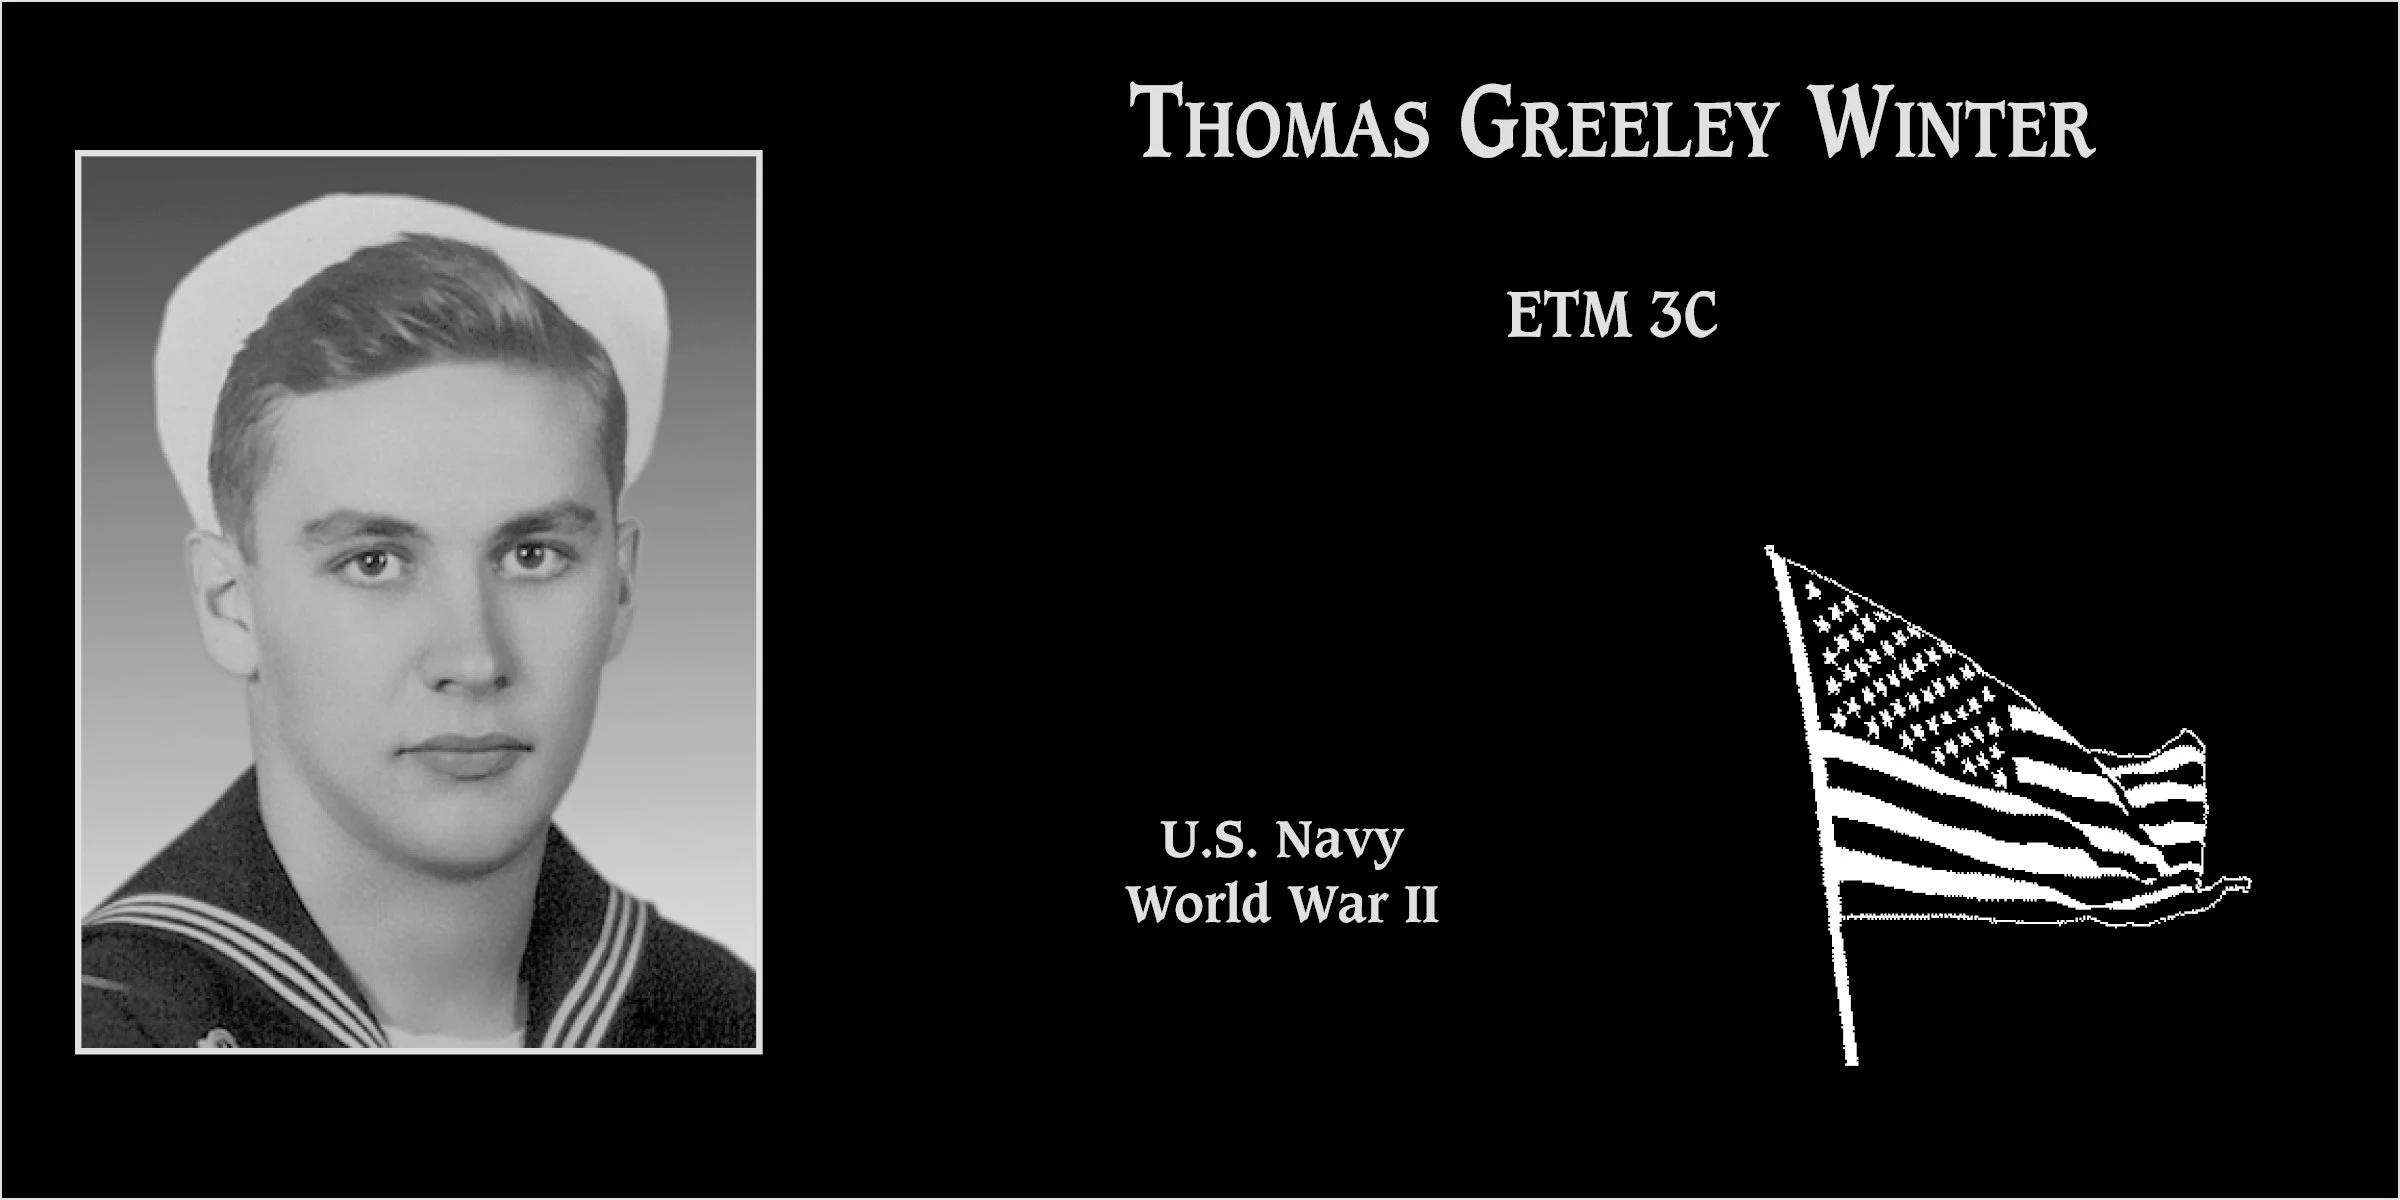 Thomas Greeley Winter